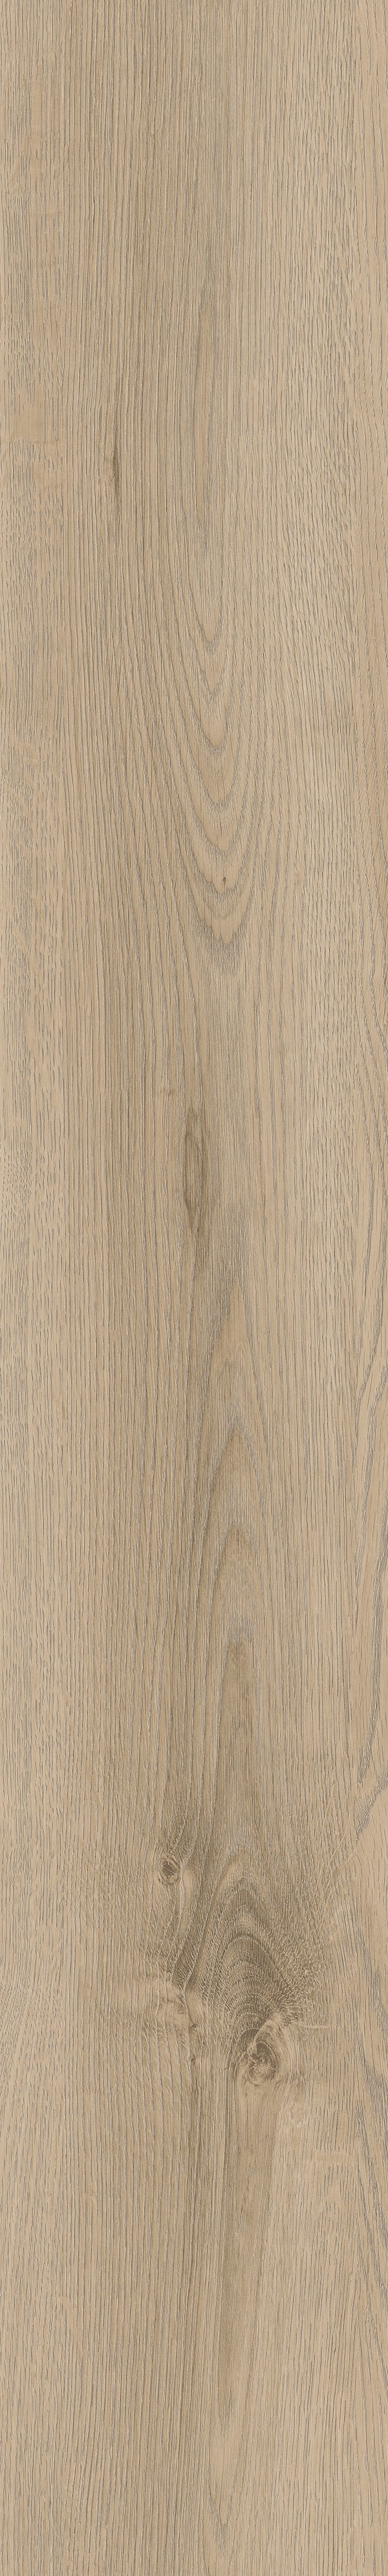 Calcolo Smallwood sandy oak plank water resistant laminate flooring 8mm